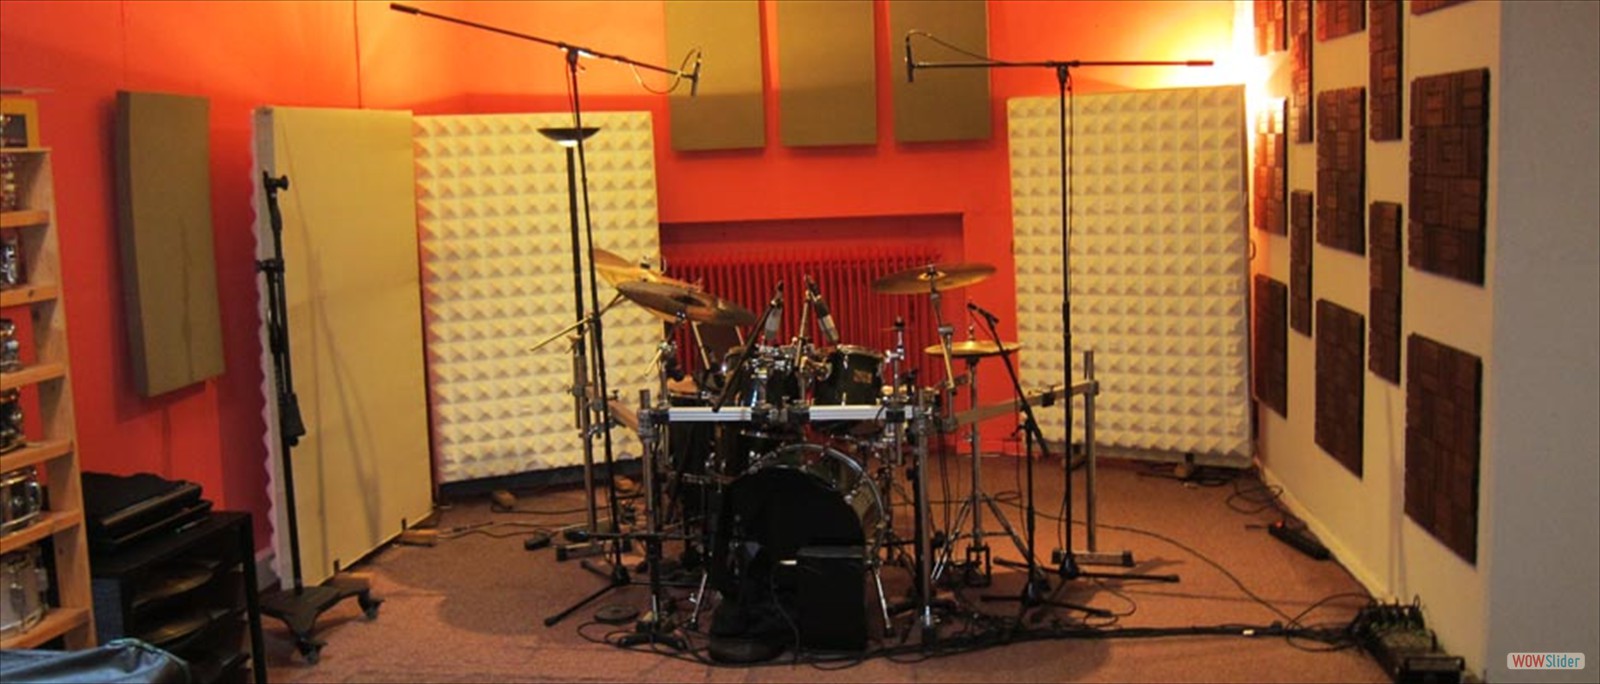 recording room 1